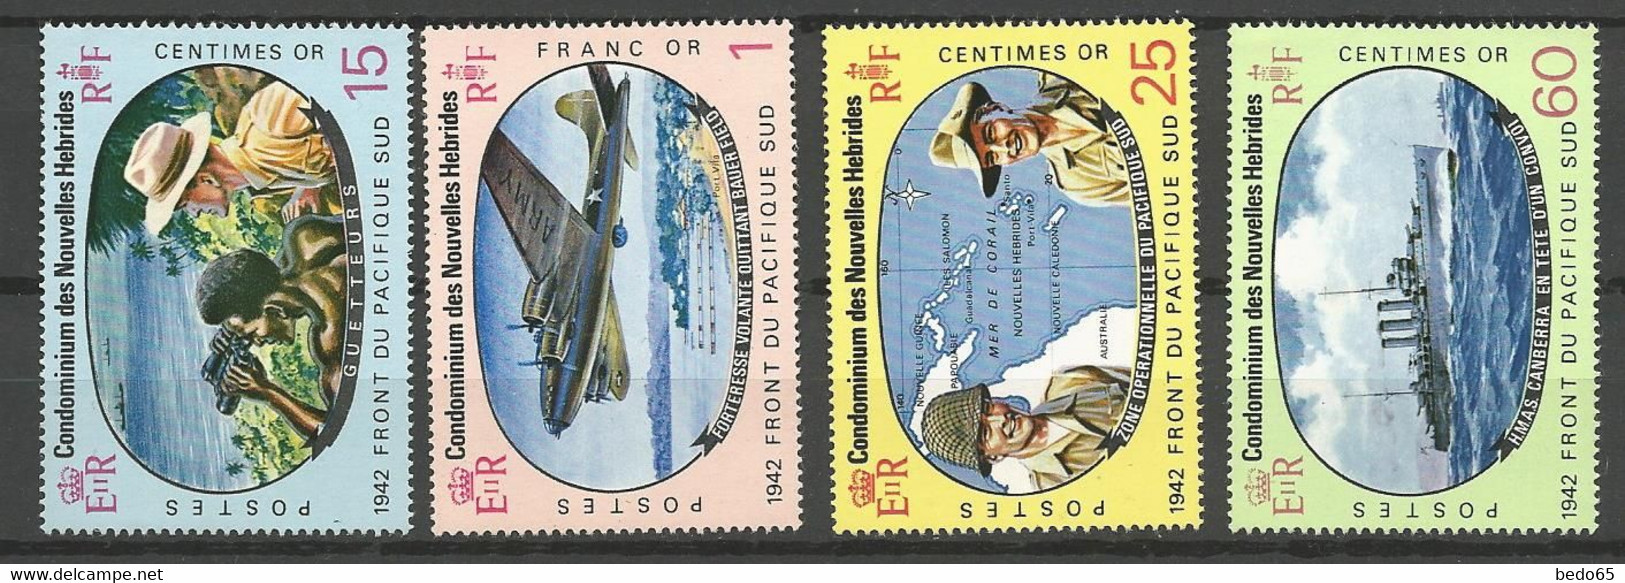 NOUVELLE HEBRIDE N° 257 à 260 NEUF**  SANS CHARNIERE   / MNH - Unused Stamps